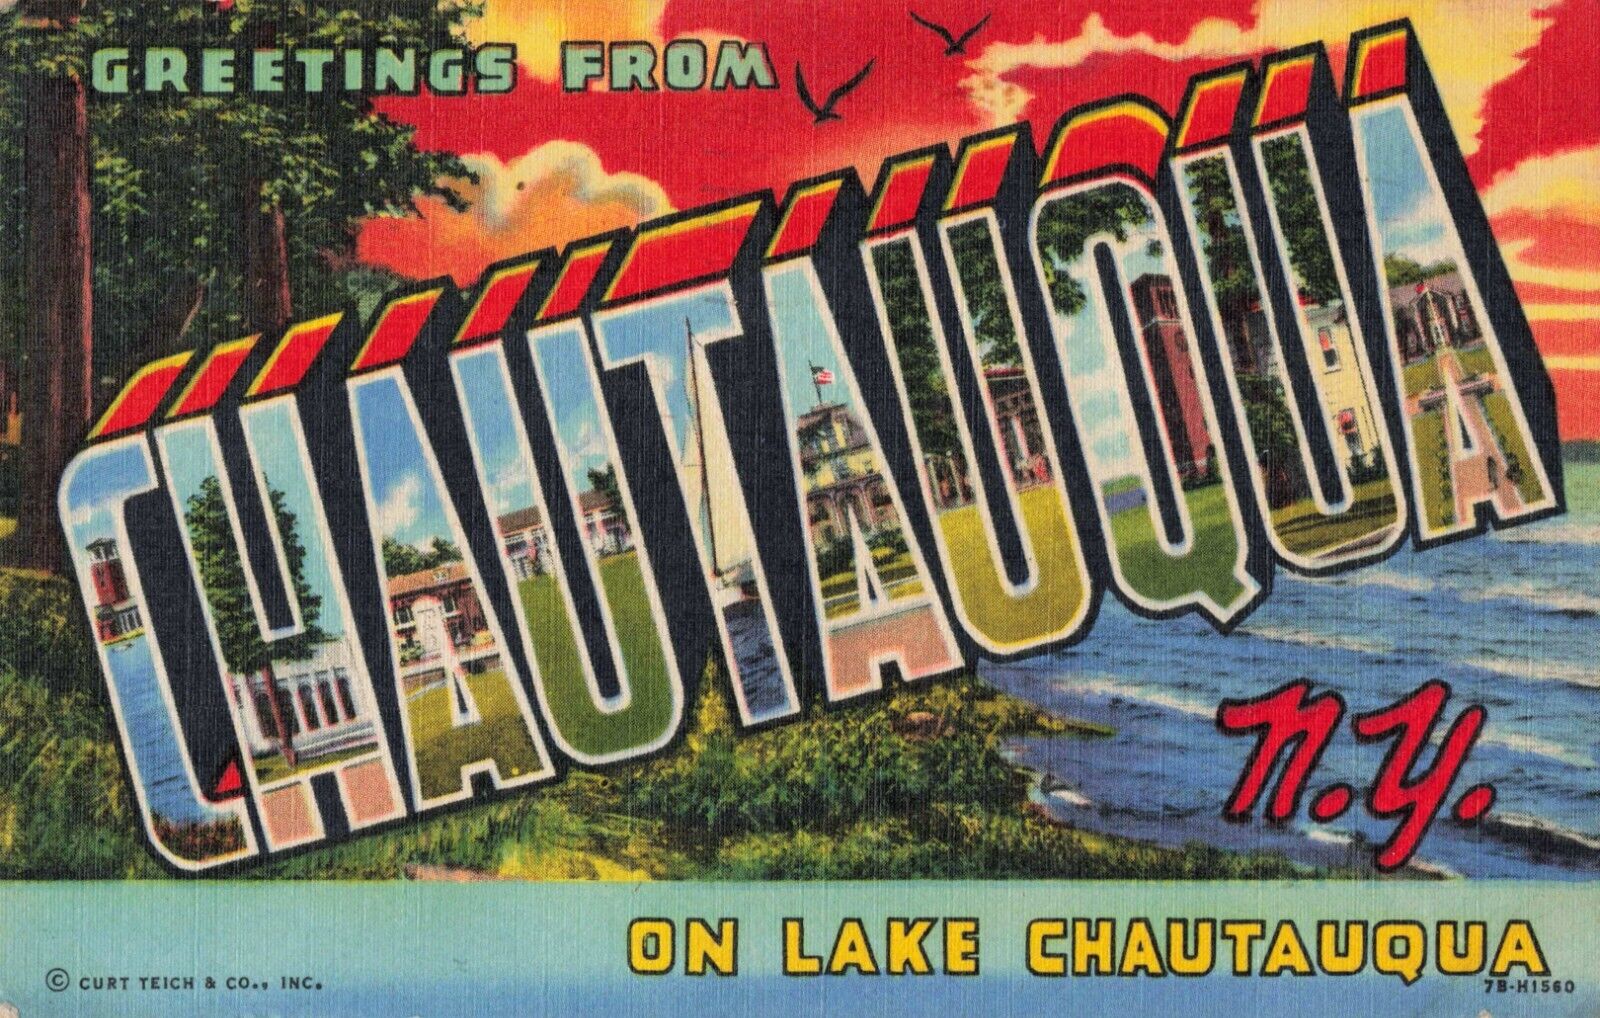 Chautauqua NY New York, Large Letter Greetings Lake Chautauqua, Vintage Postcard